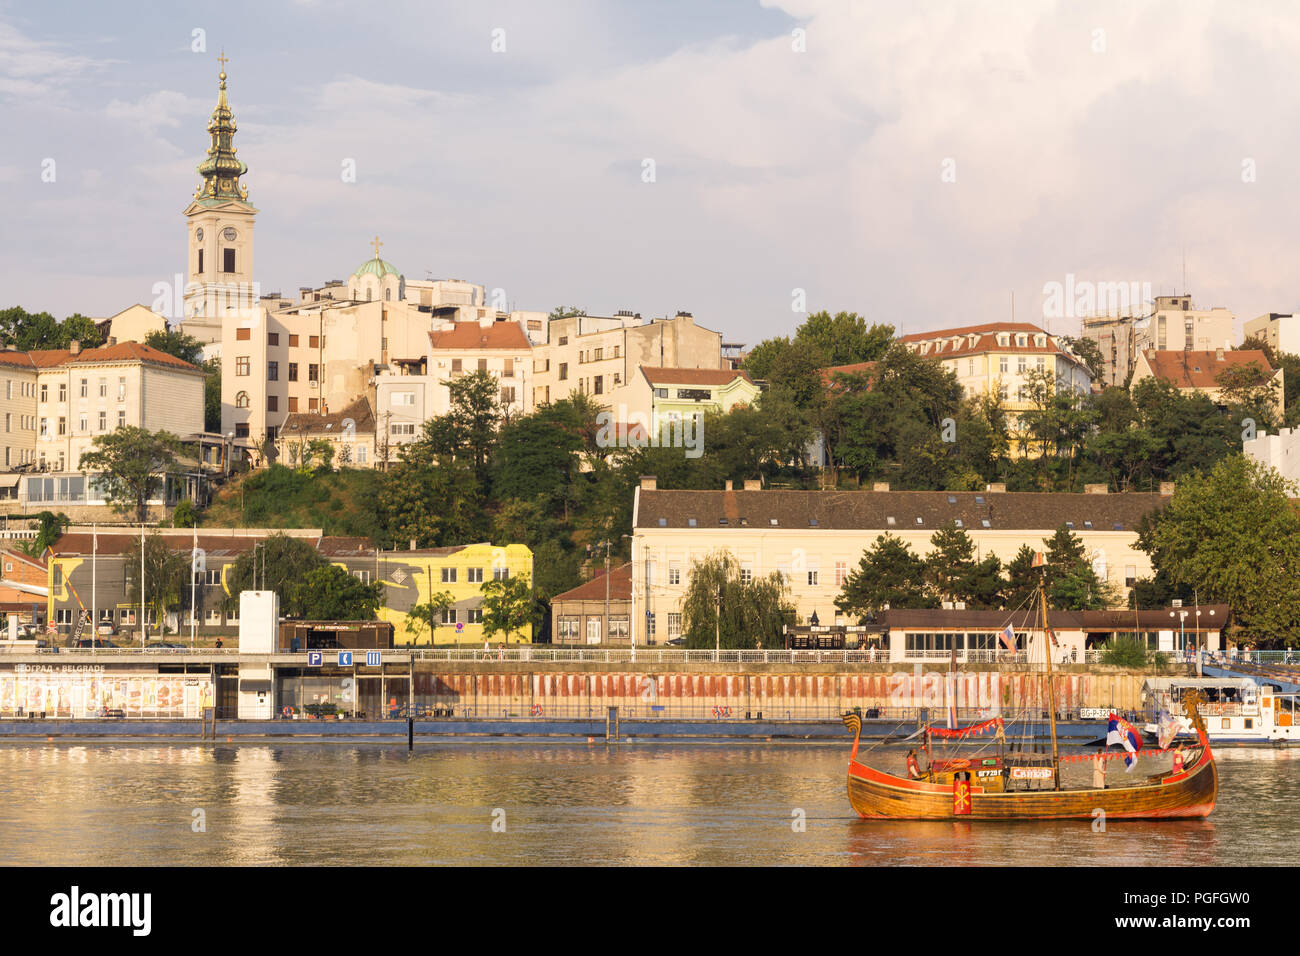 Belgrade Serbia cityscape - the Old Town (Stari Grad) seen from across the Sava River, Serbia, Europe. Stock Photo